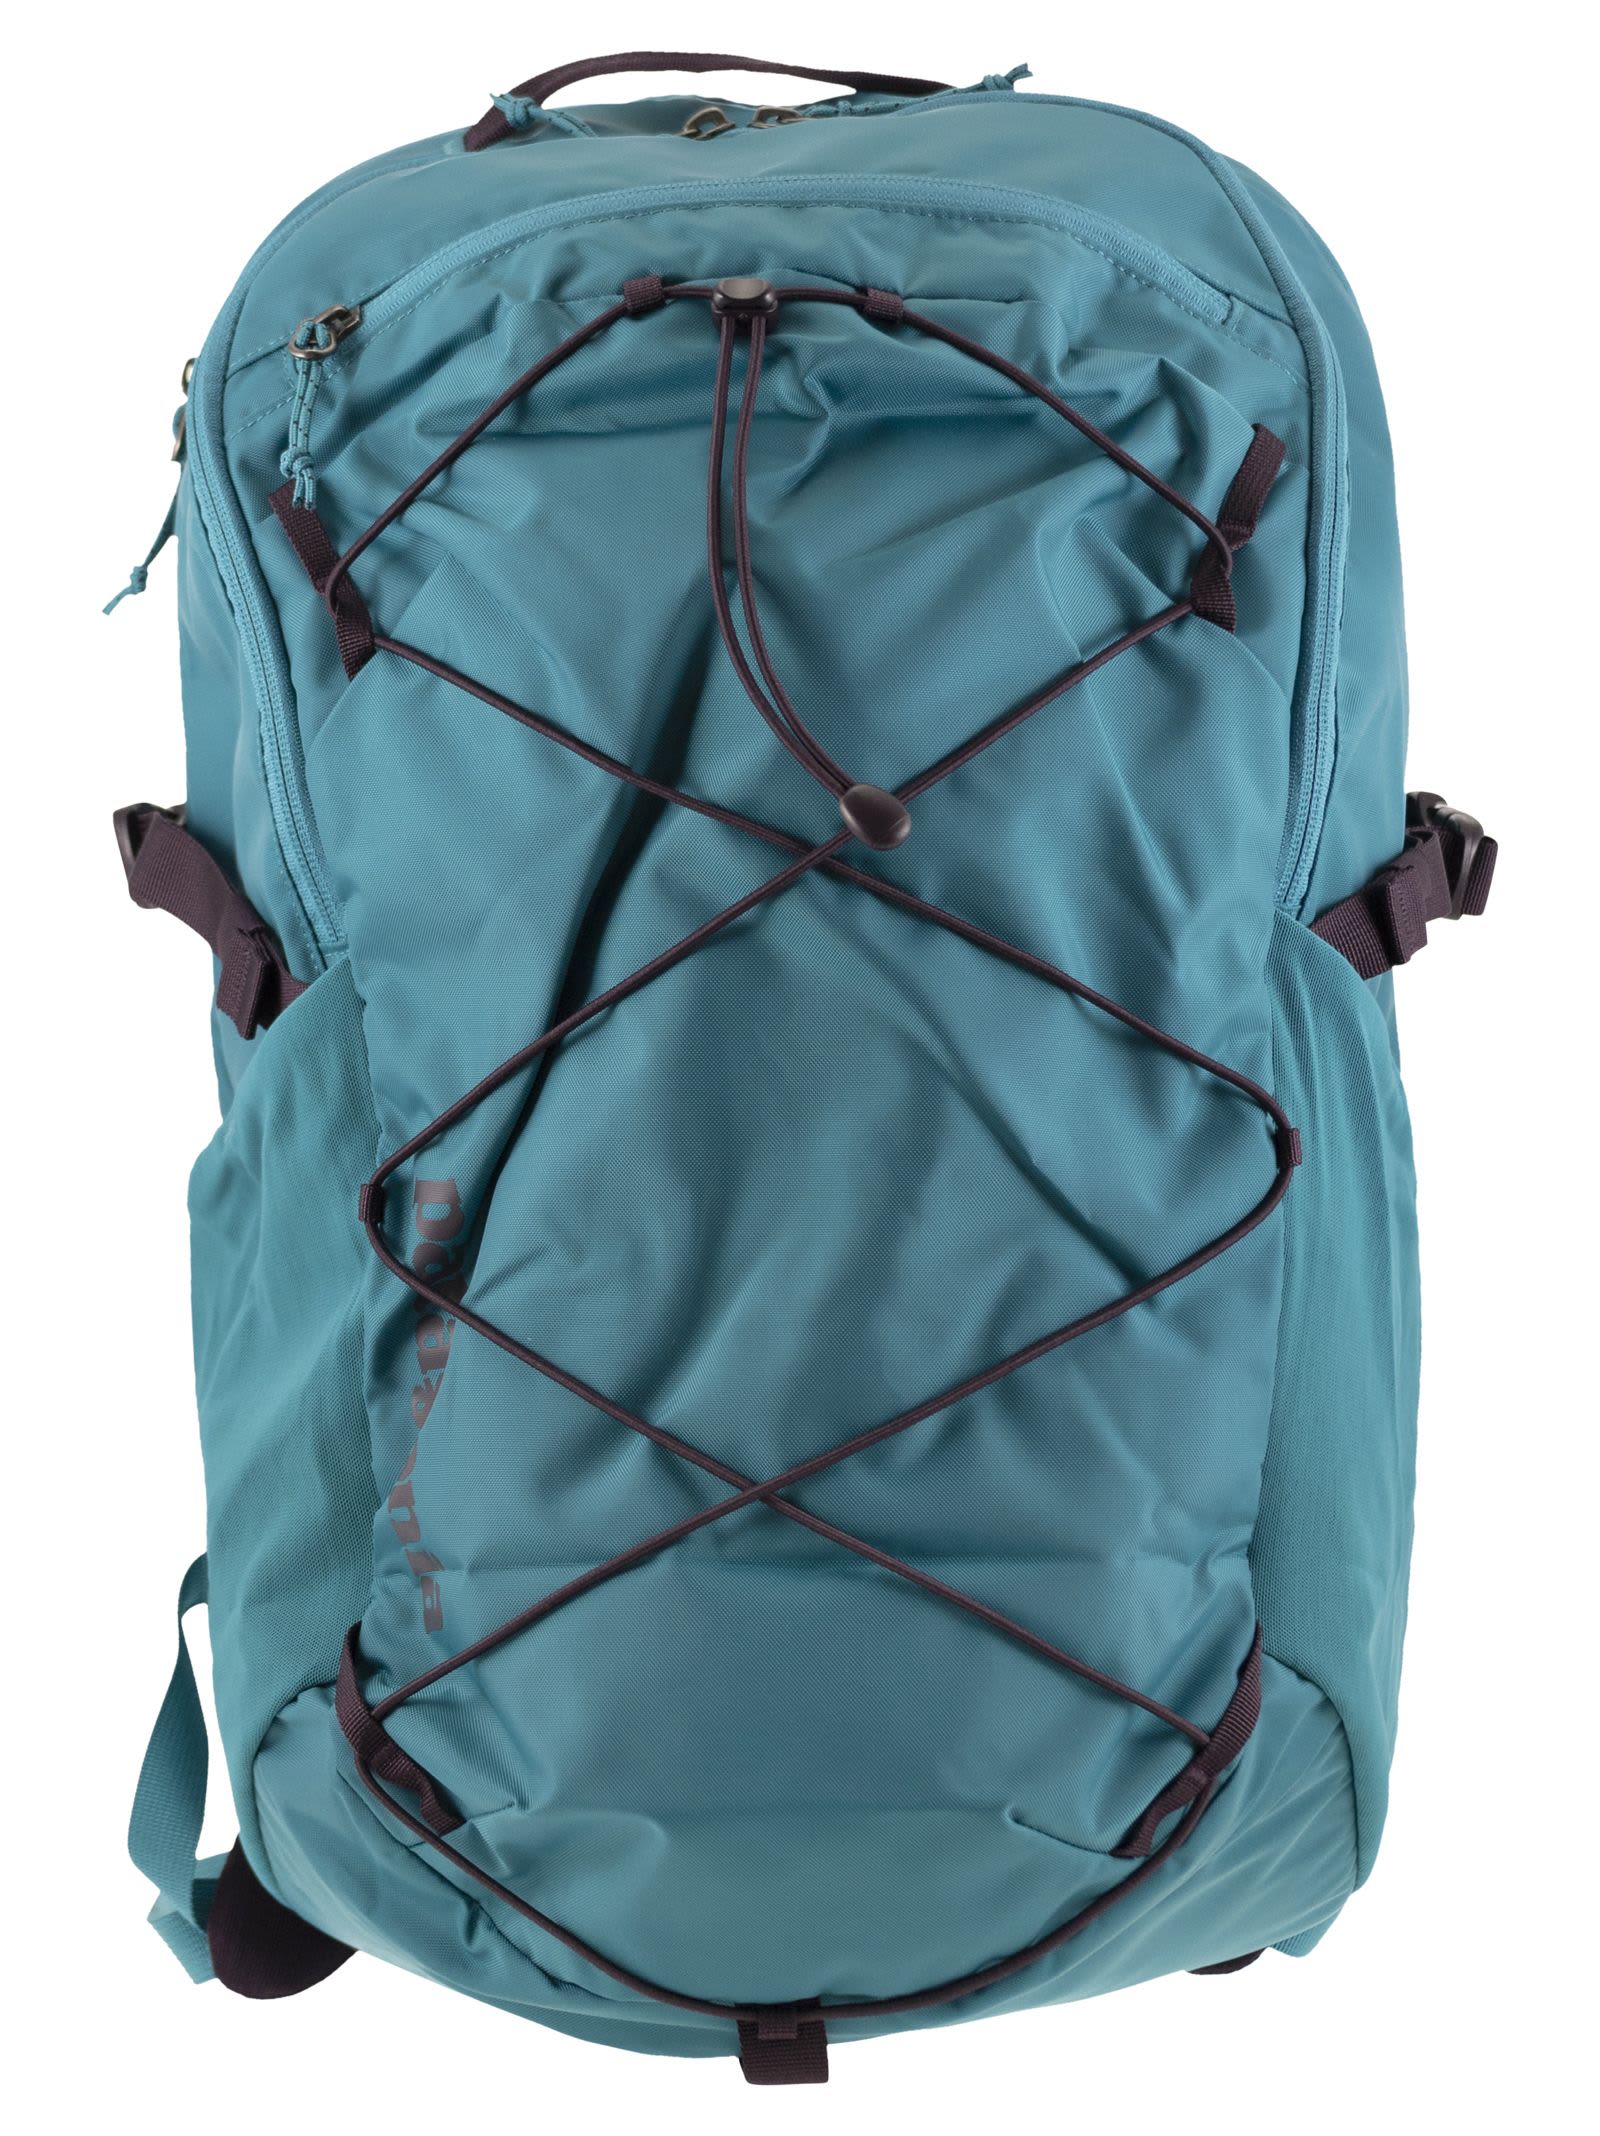 Patagonia Refugio Day Pack - Backpack - 0Light Blue - unisex - Size: 0one size